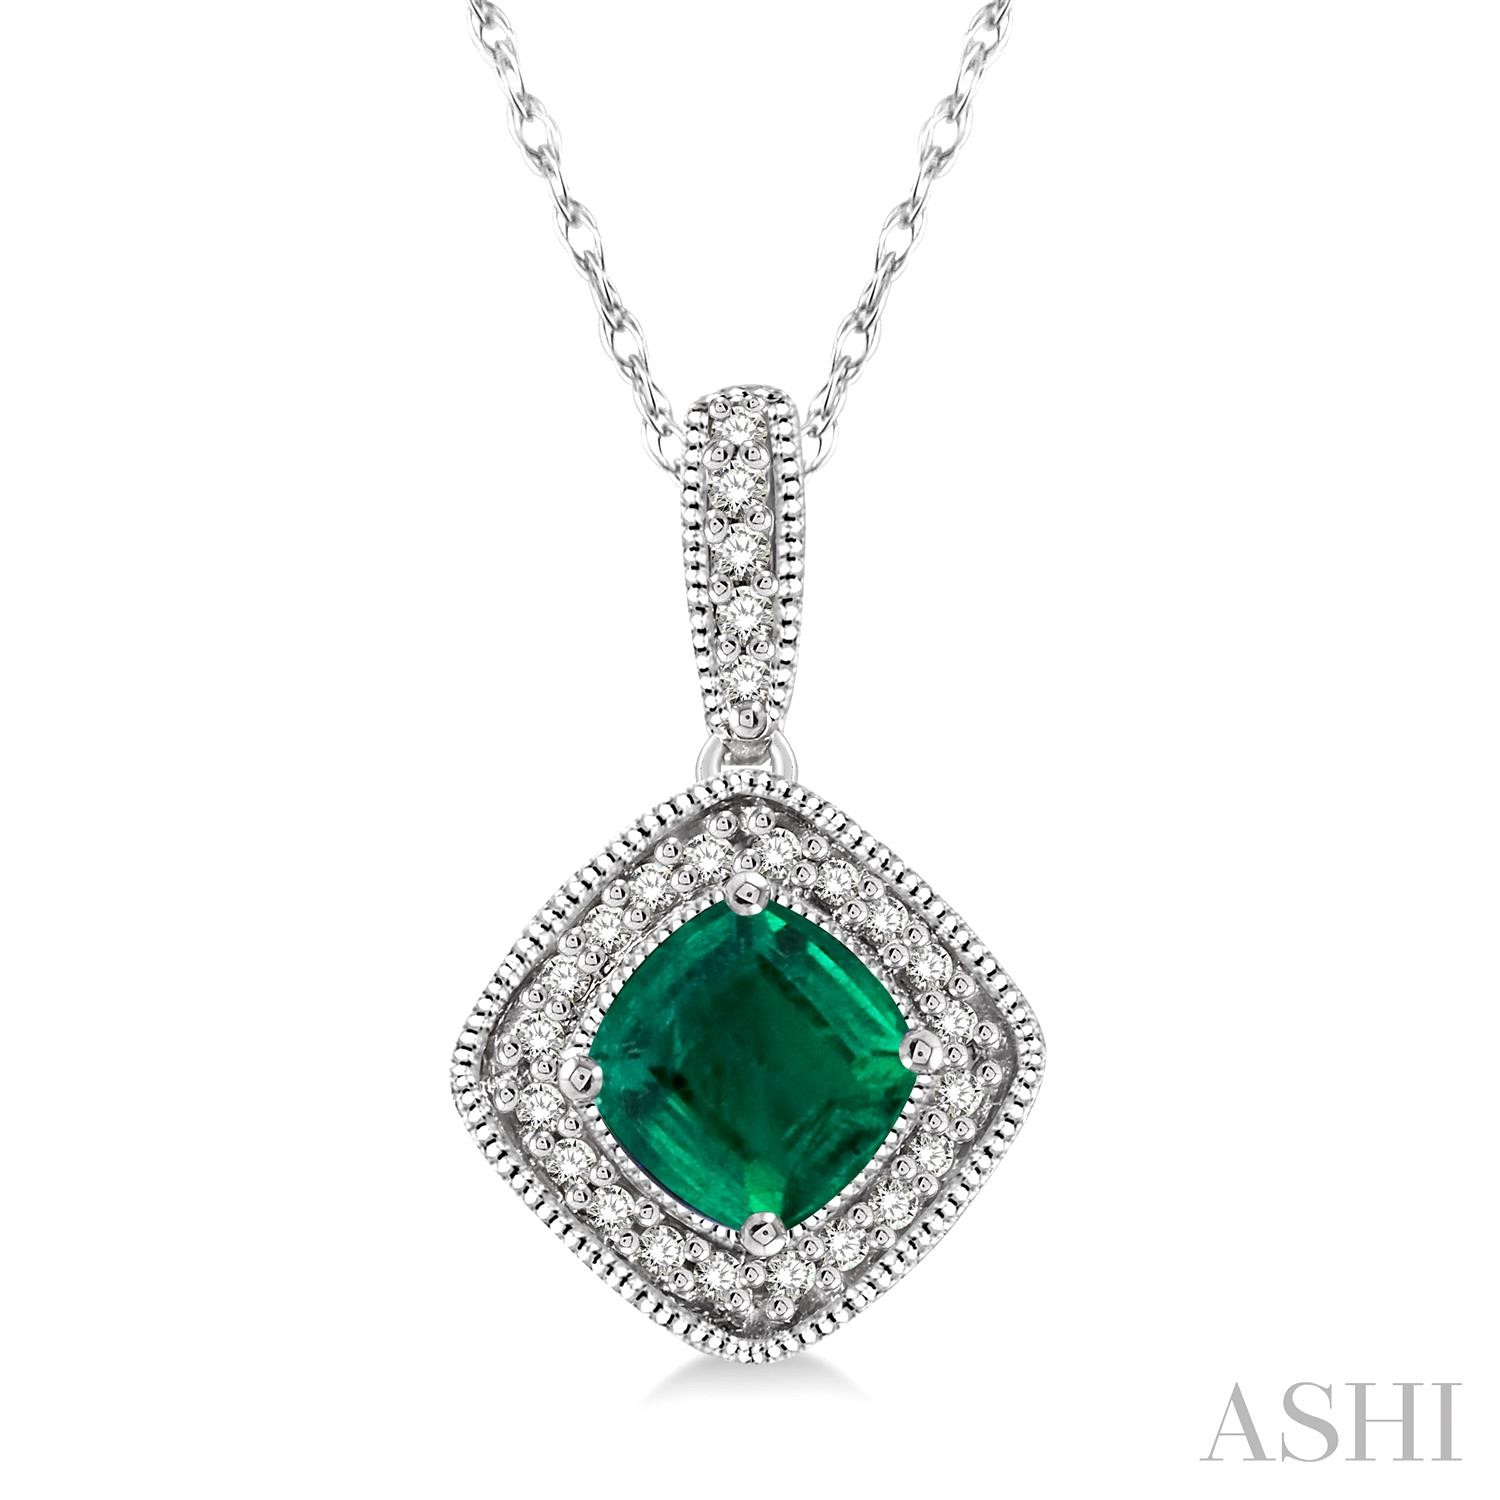 Cushion Shape Gemstone & Halo Diamond Pendant
5x5 MM Cushion Shape Emerald and 1/5 Ctw Round Cut Diamond Pendant in 14K White Gold with Chain